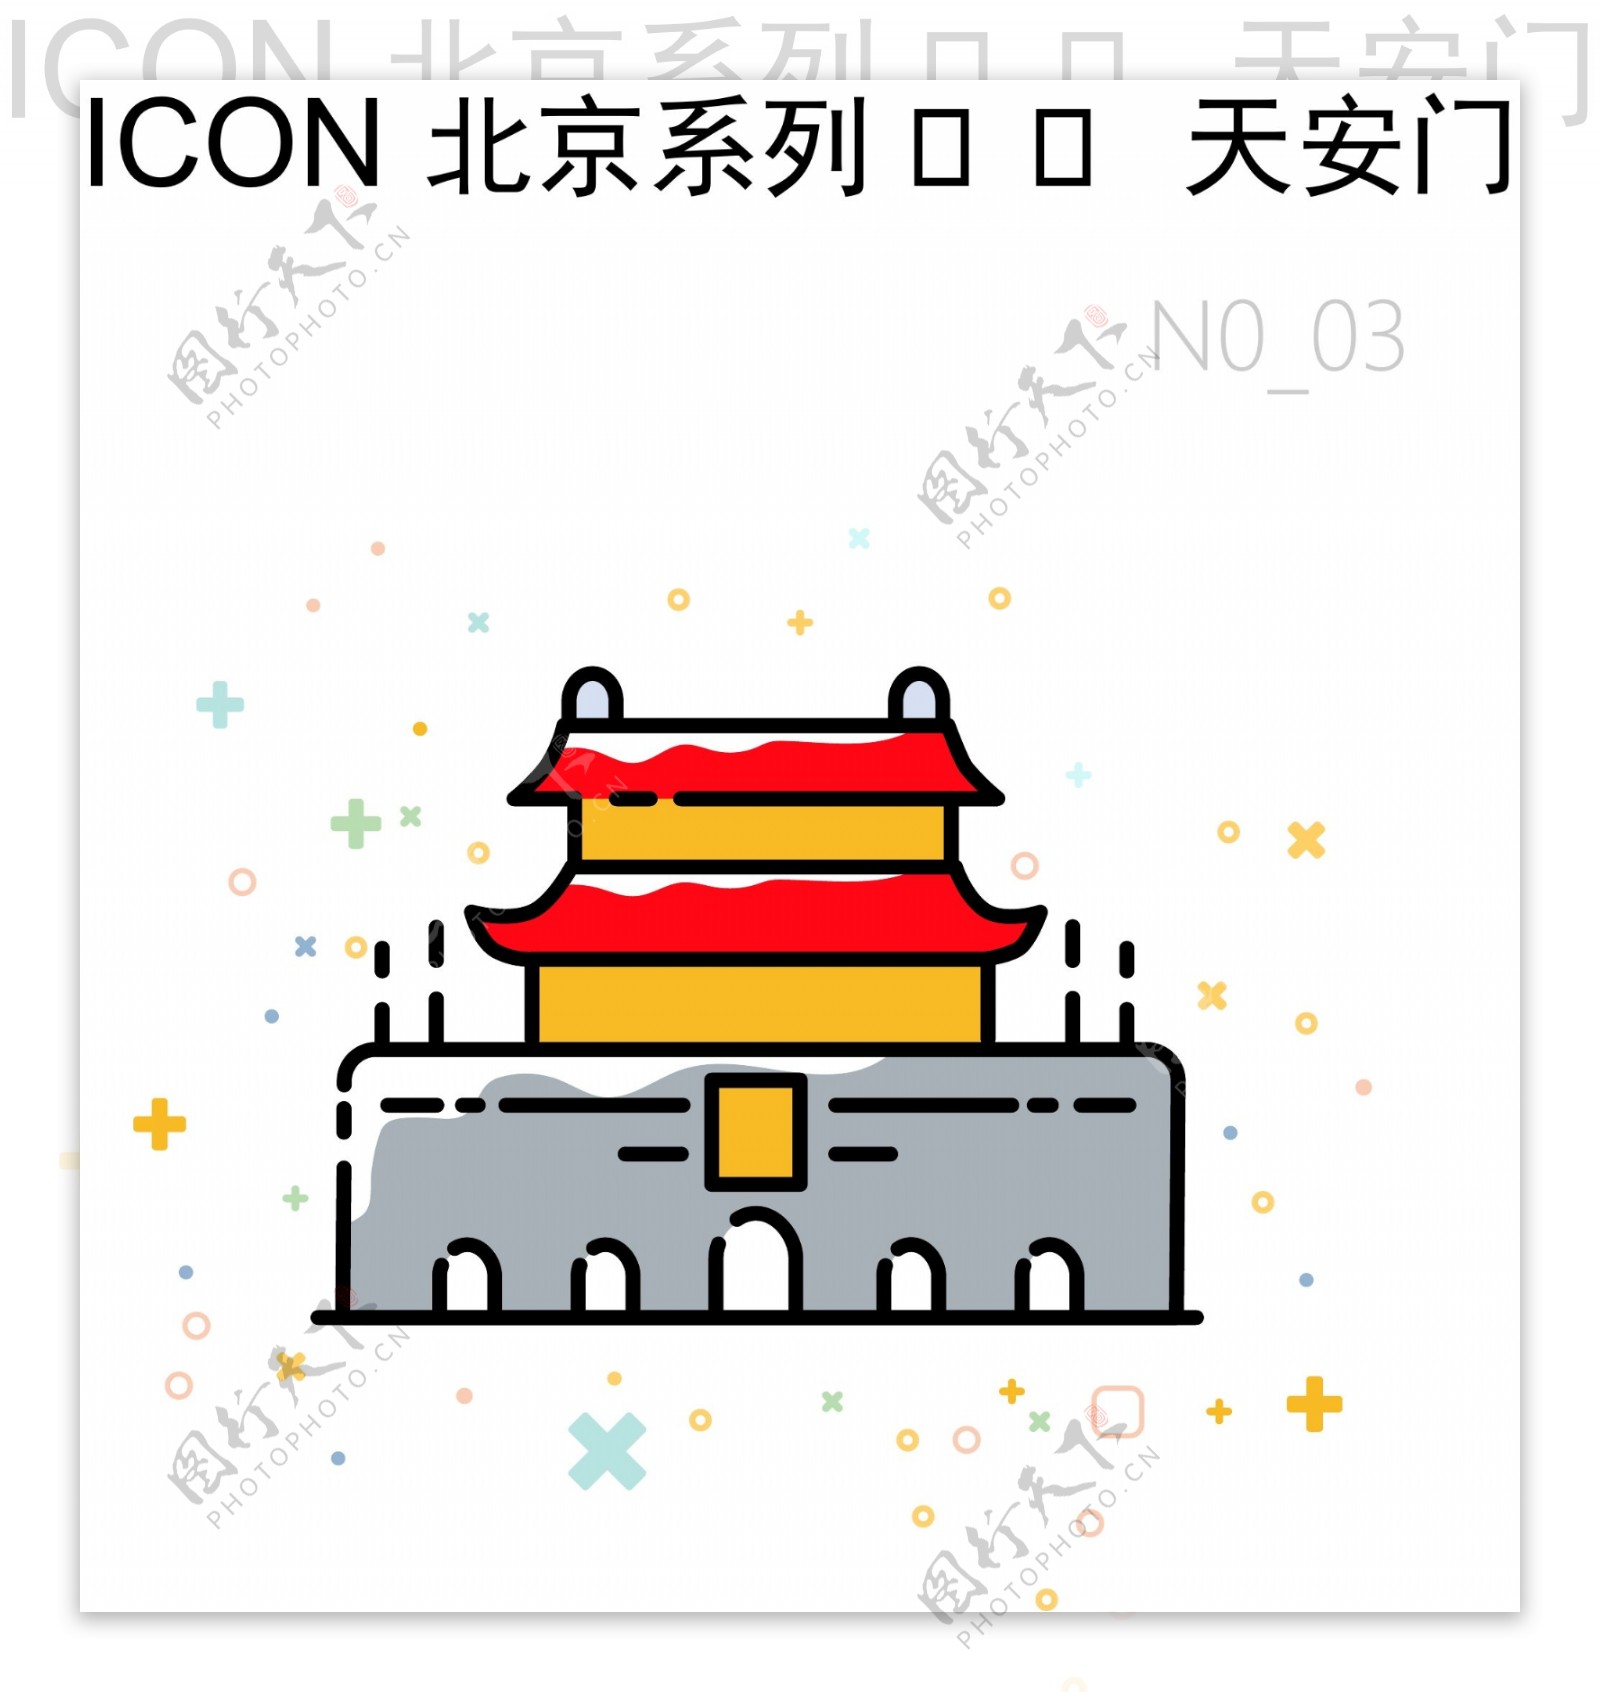 icon北京天安门图标